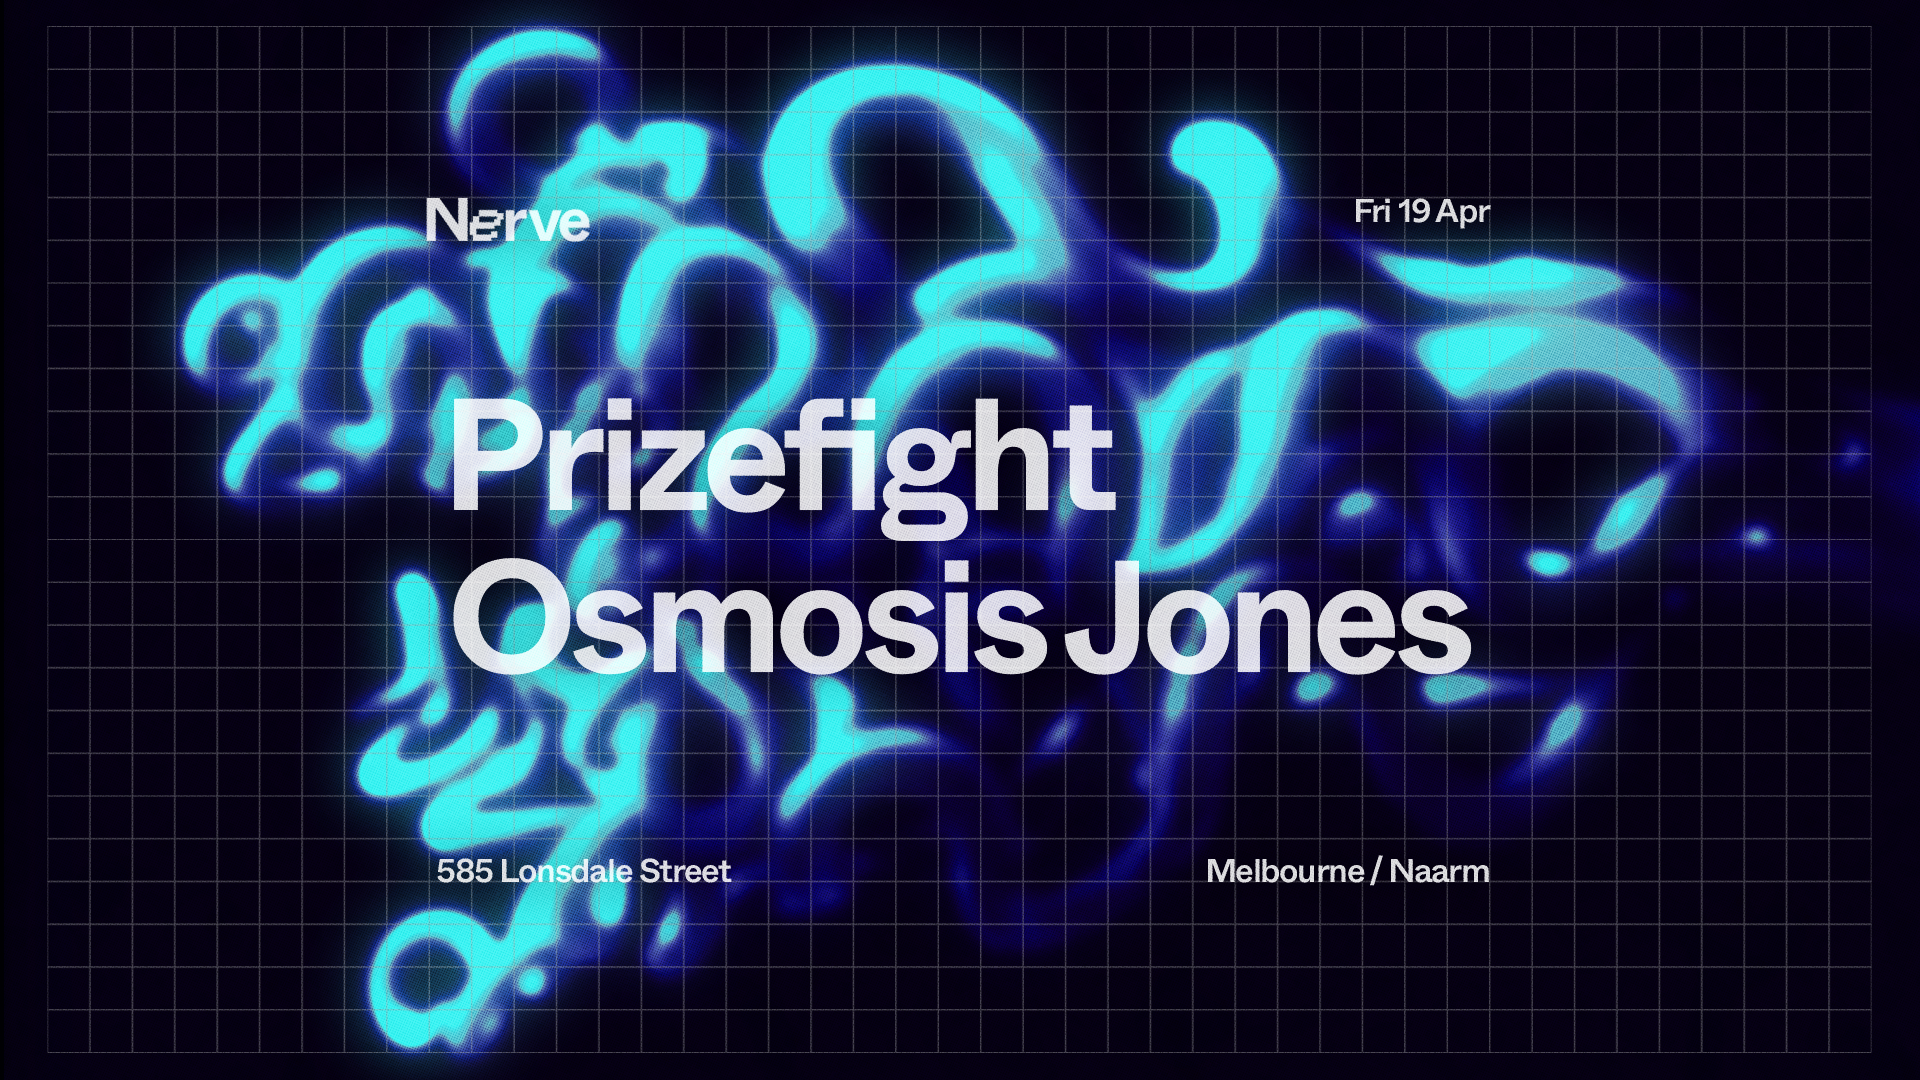 Nerve - Prizefight + Osmosis Jones